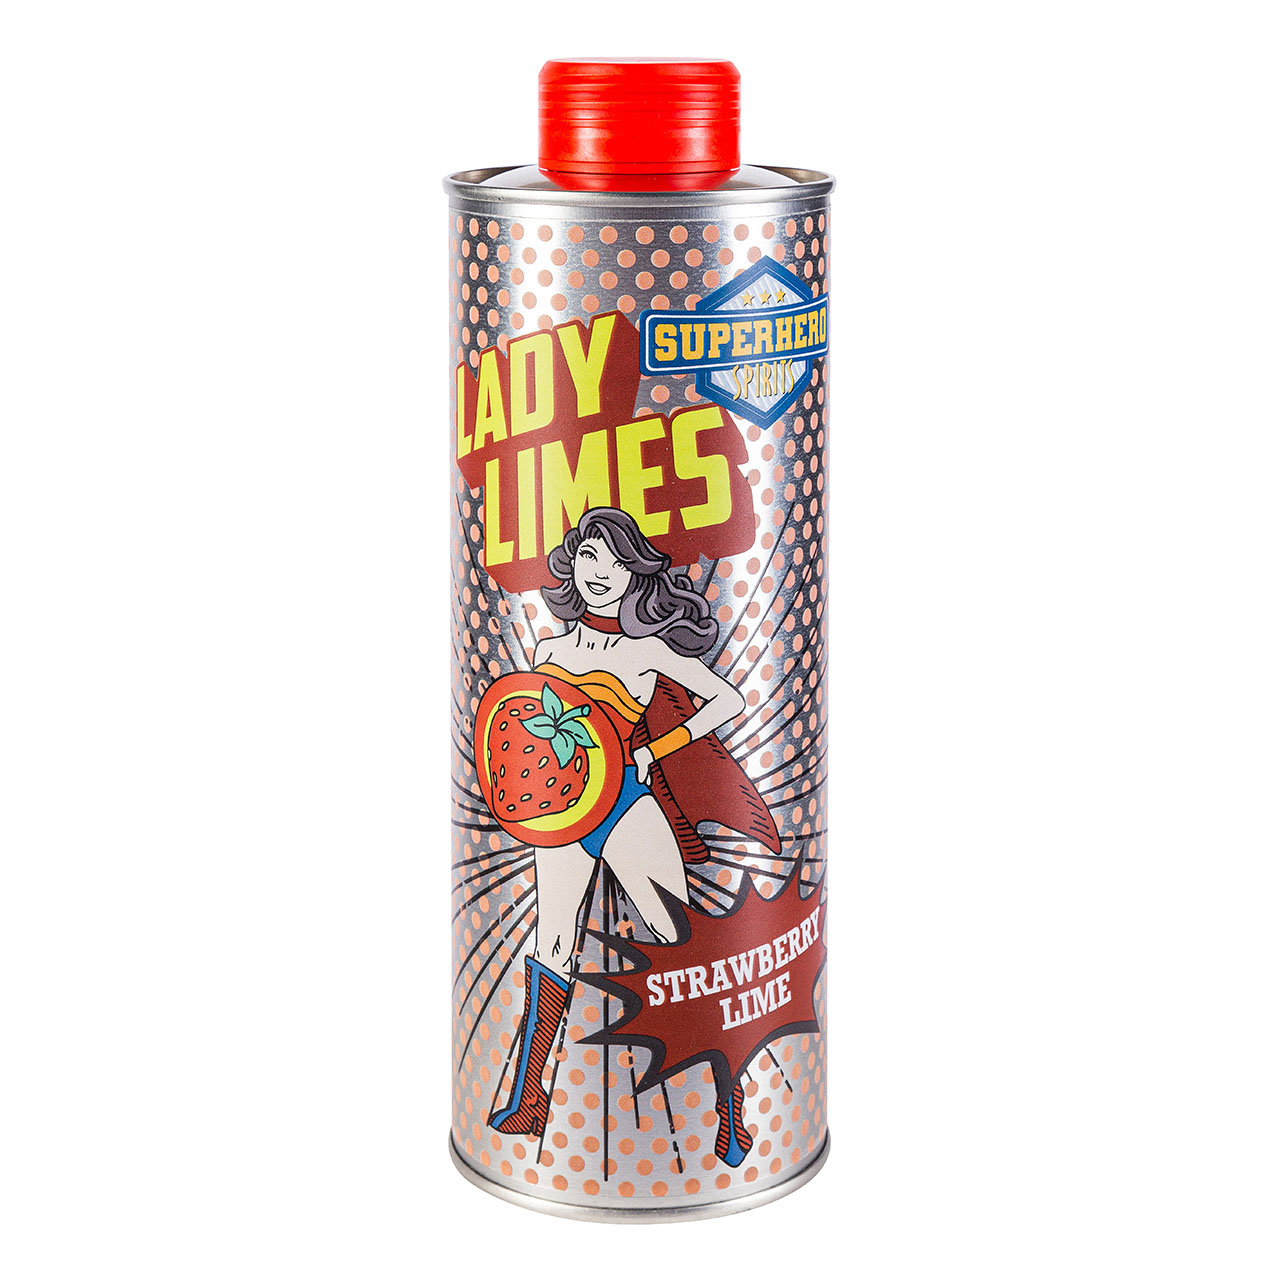 Superhero Spirits - Lady Limes - Strawberry Lime - 0,5l 20% vol.